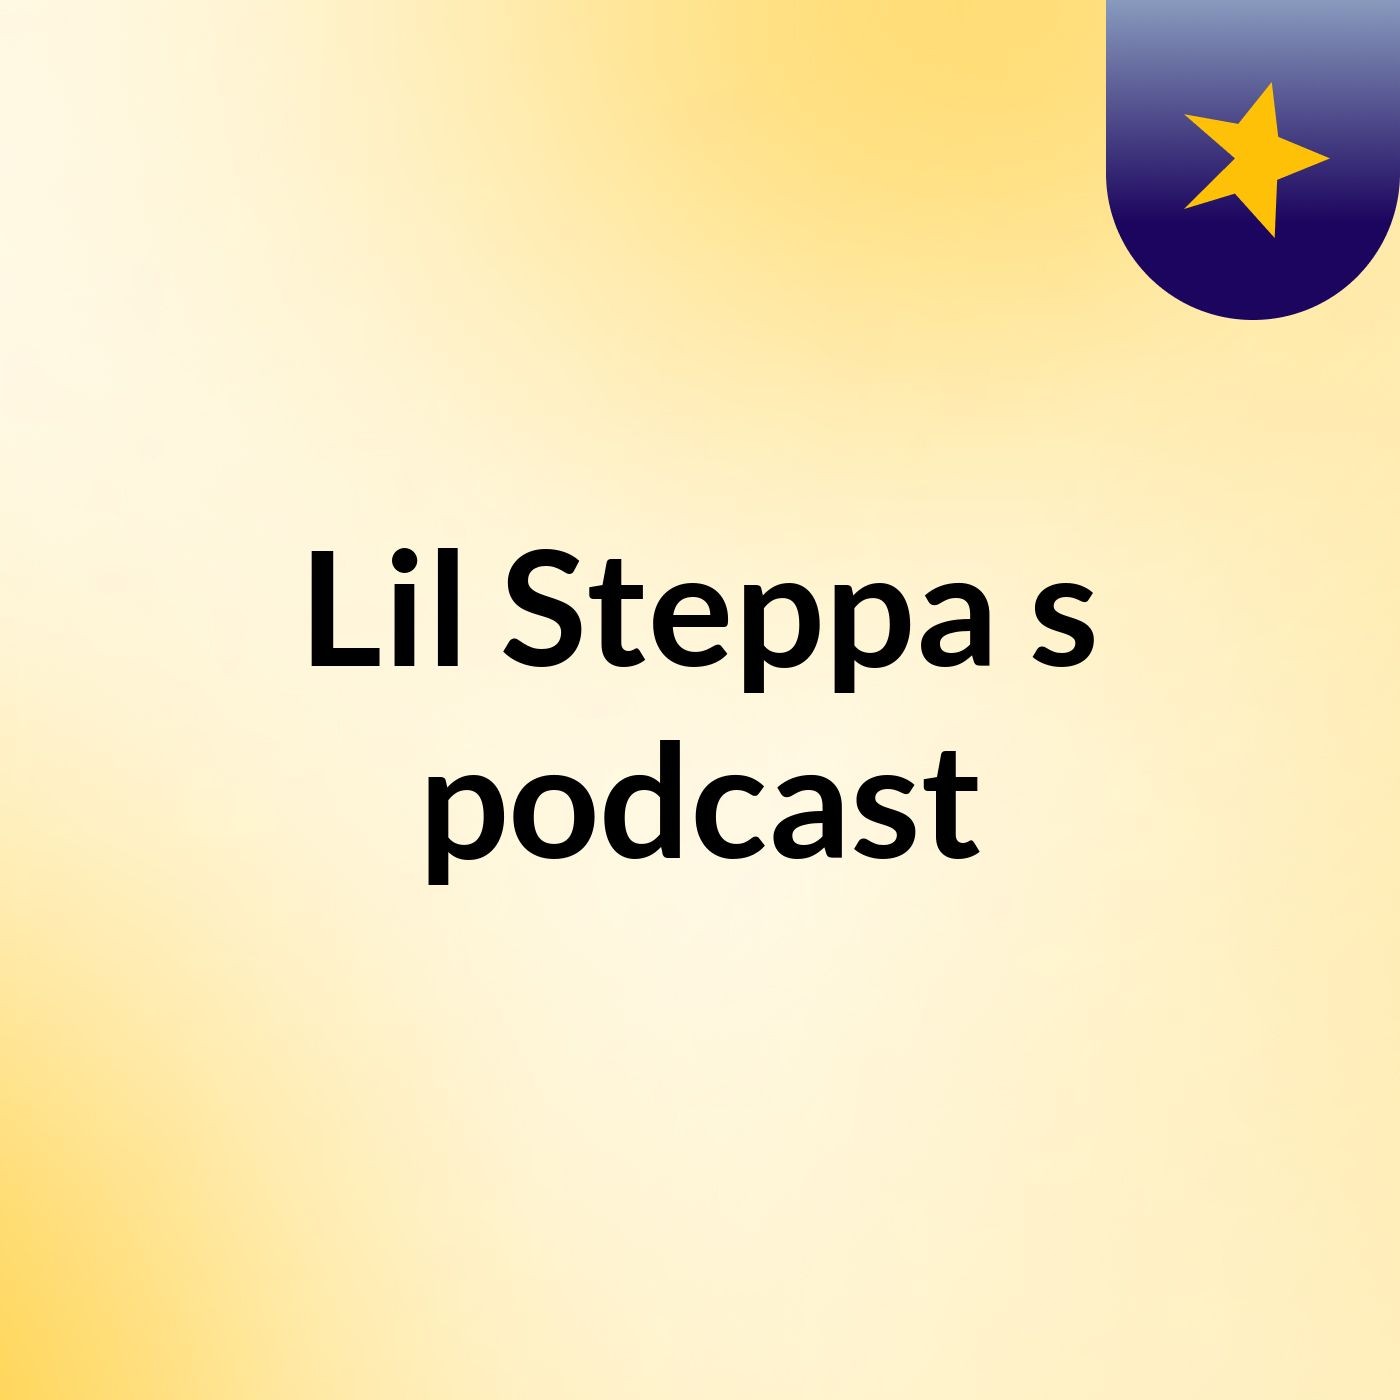 Lil Steppa's podcast